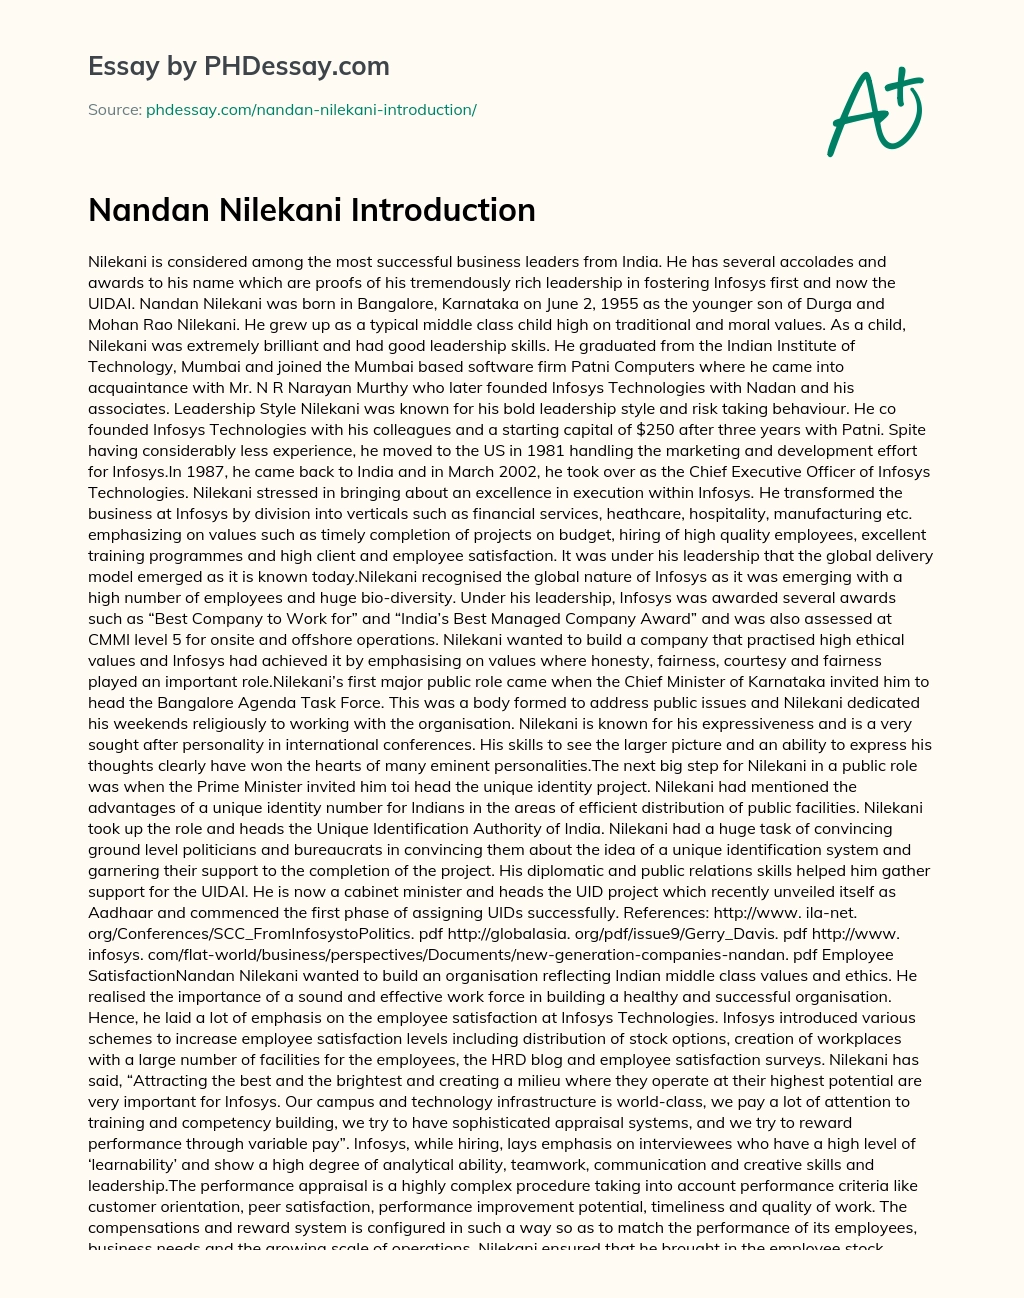 Nandan Nilekani Introduction essay